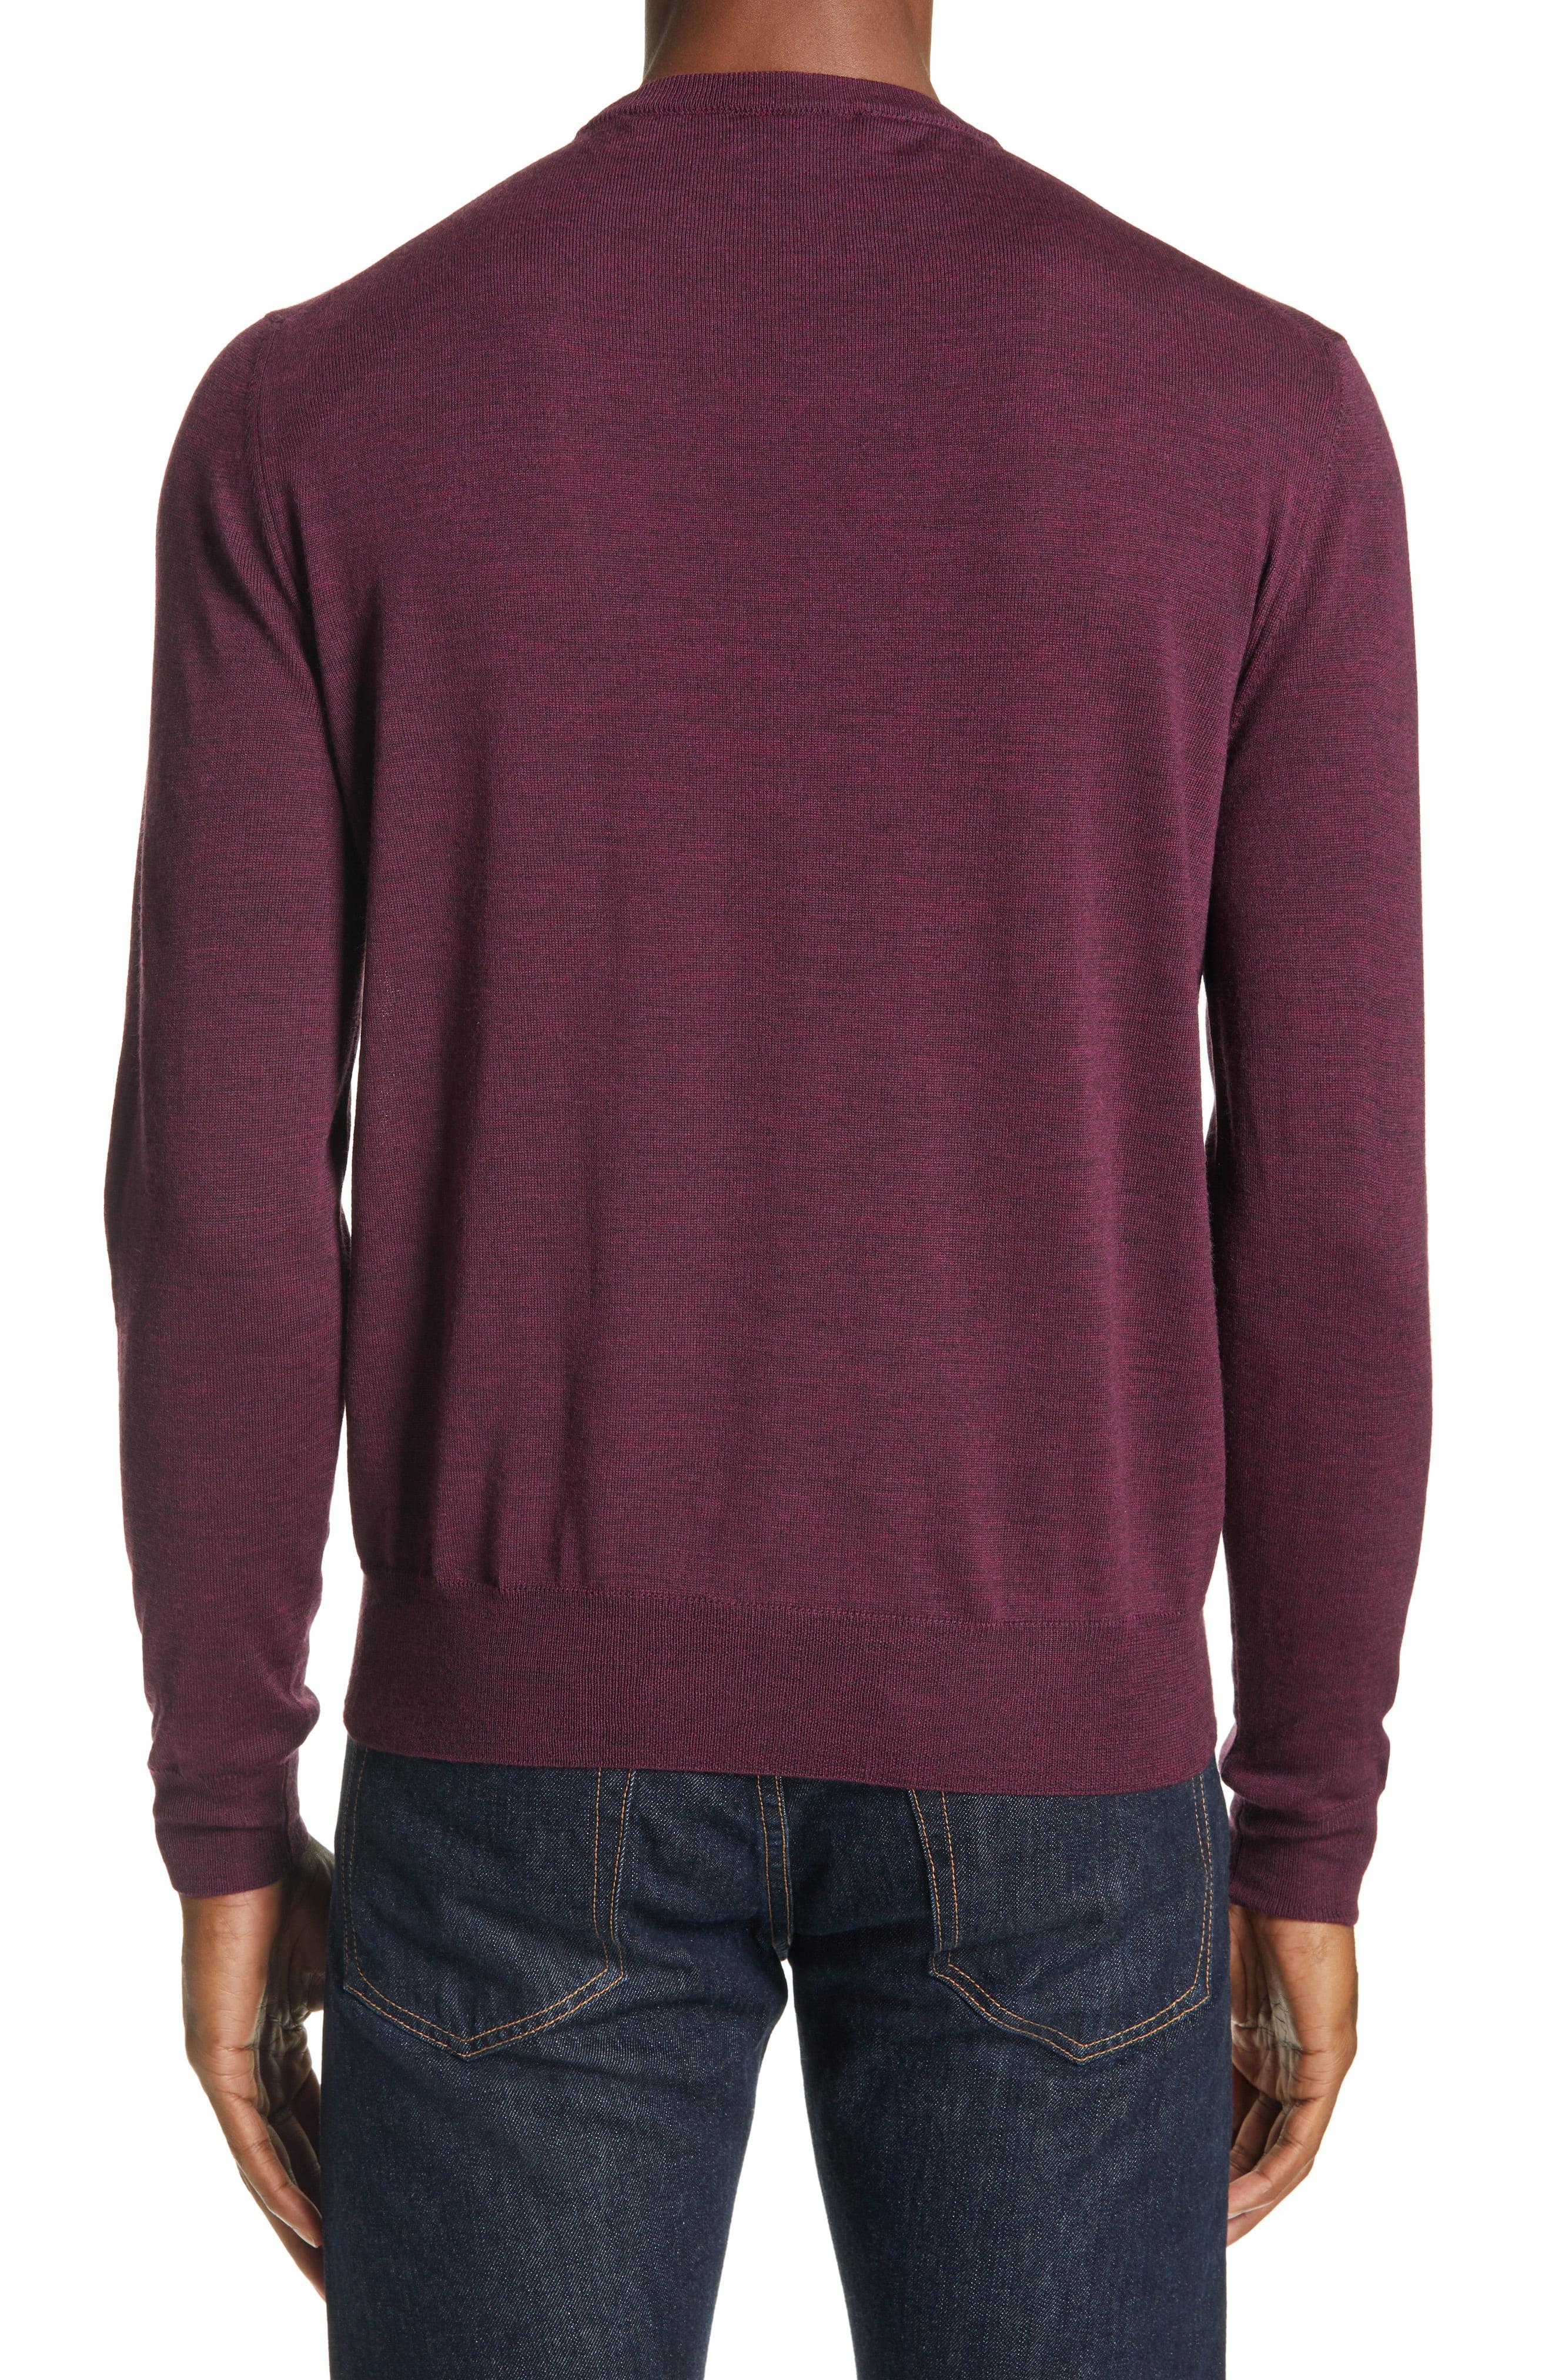 Canali Crewneck Wool Sweater in Burgundy (Purple) for Men - Lyst